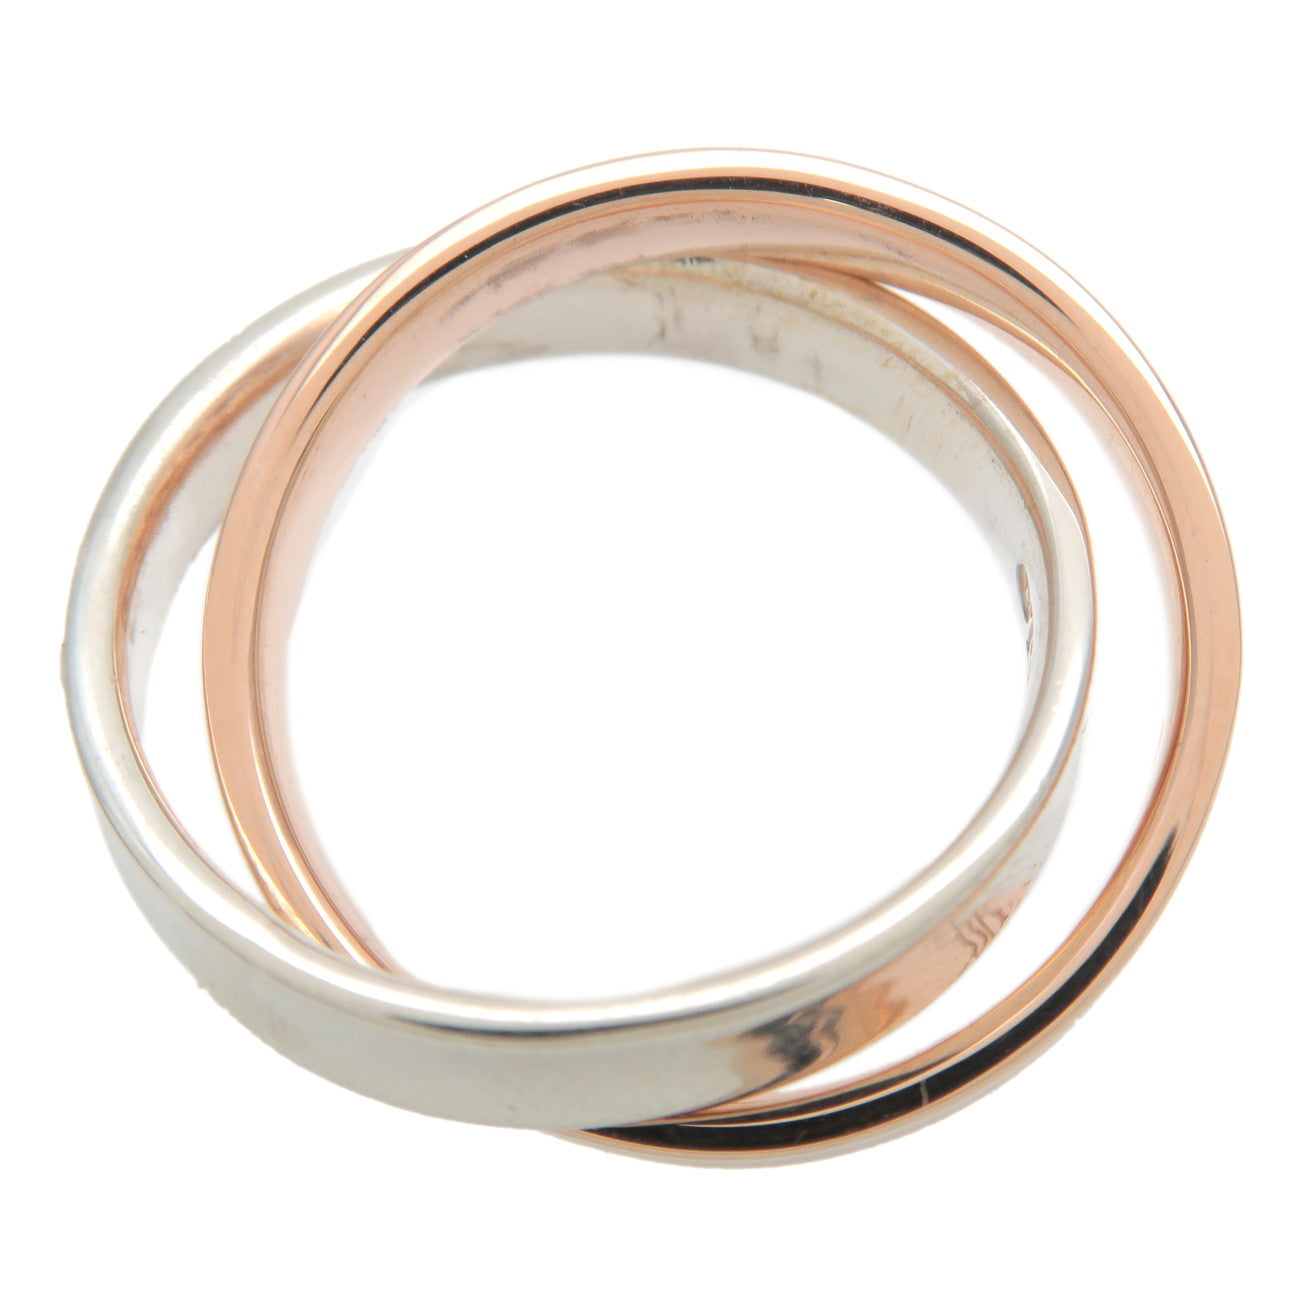 Tiffany&Co. 1837 Interlocking Ring SV925 Bronze US4 EU47 HK8.5